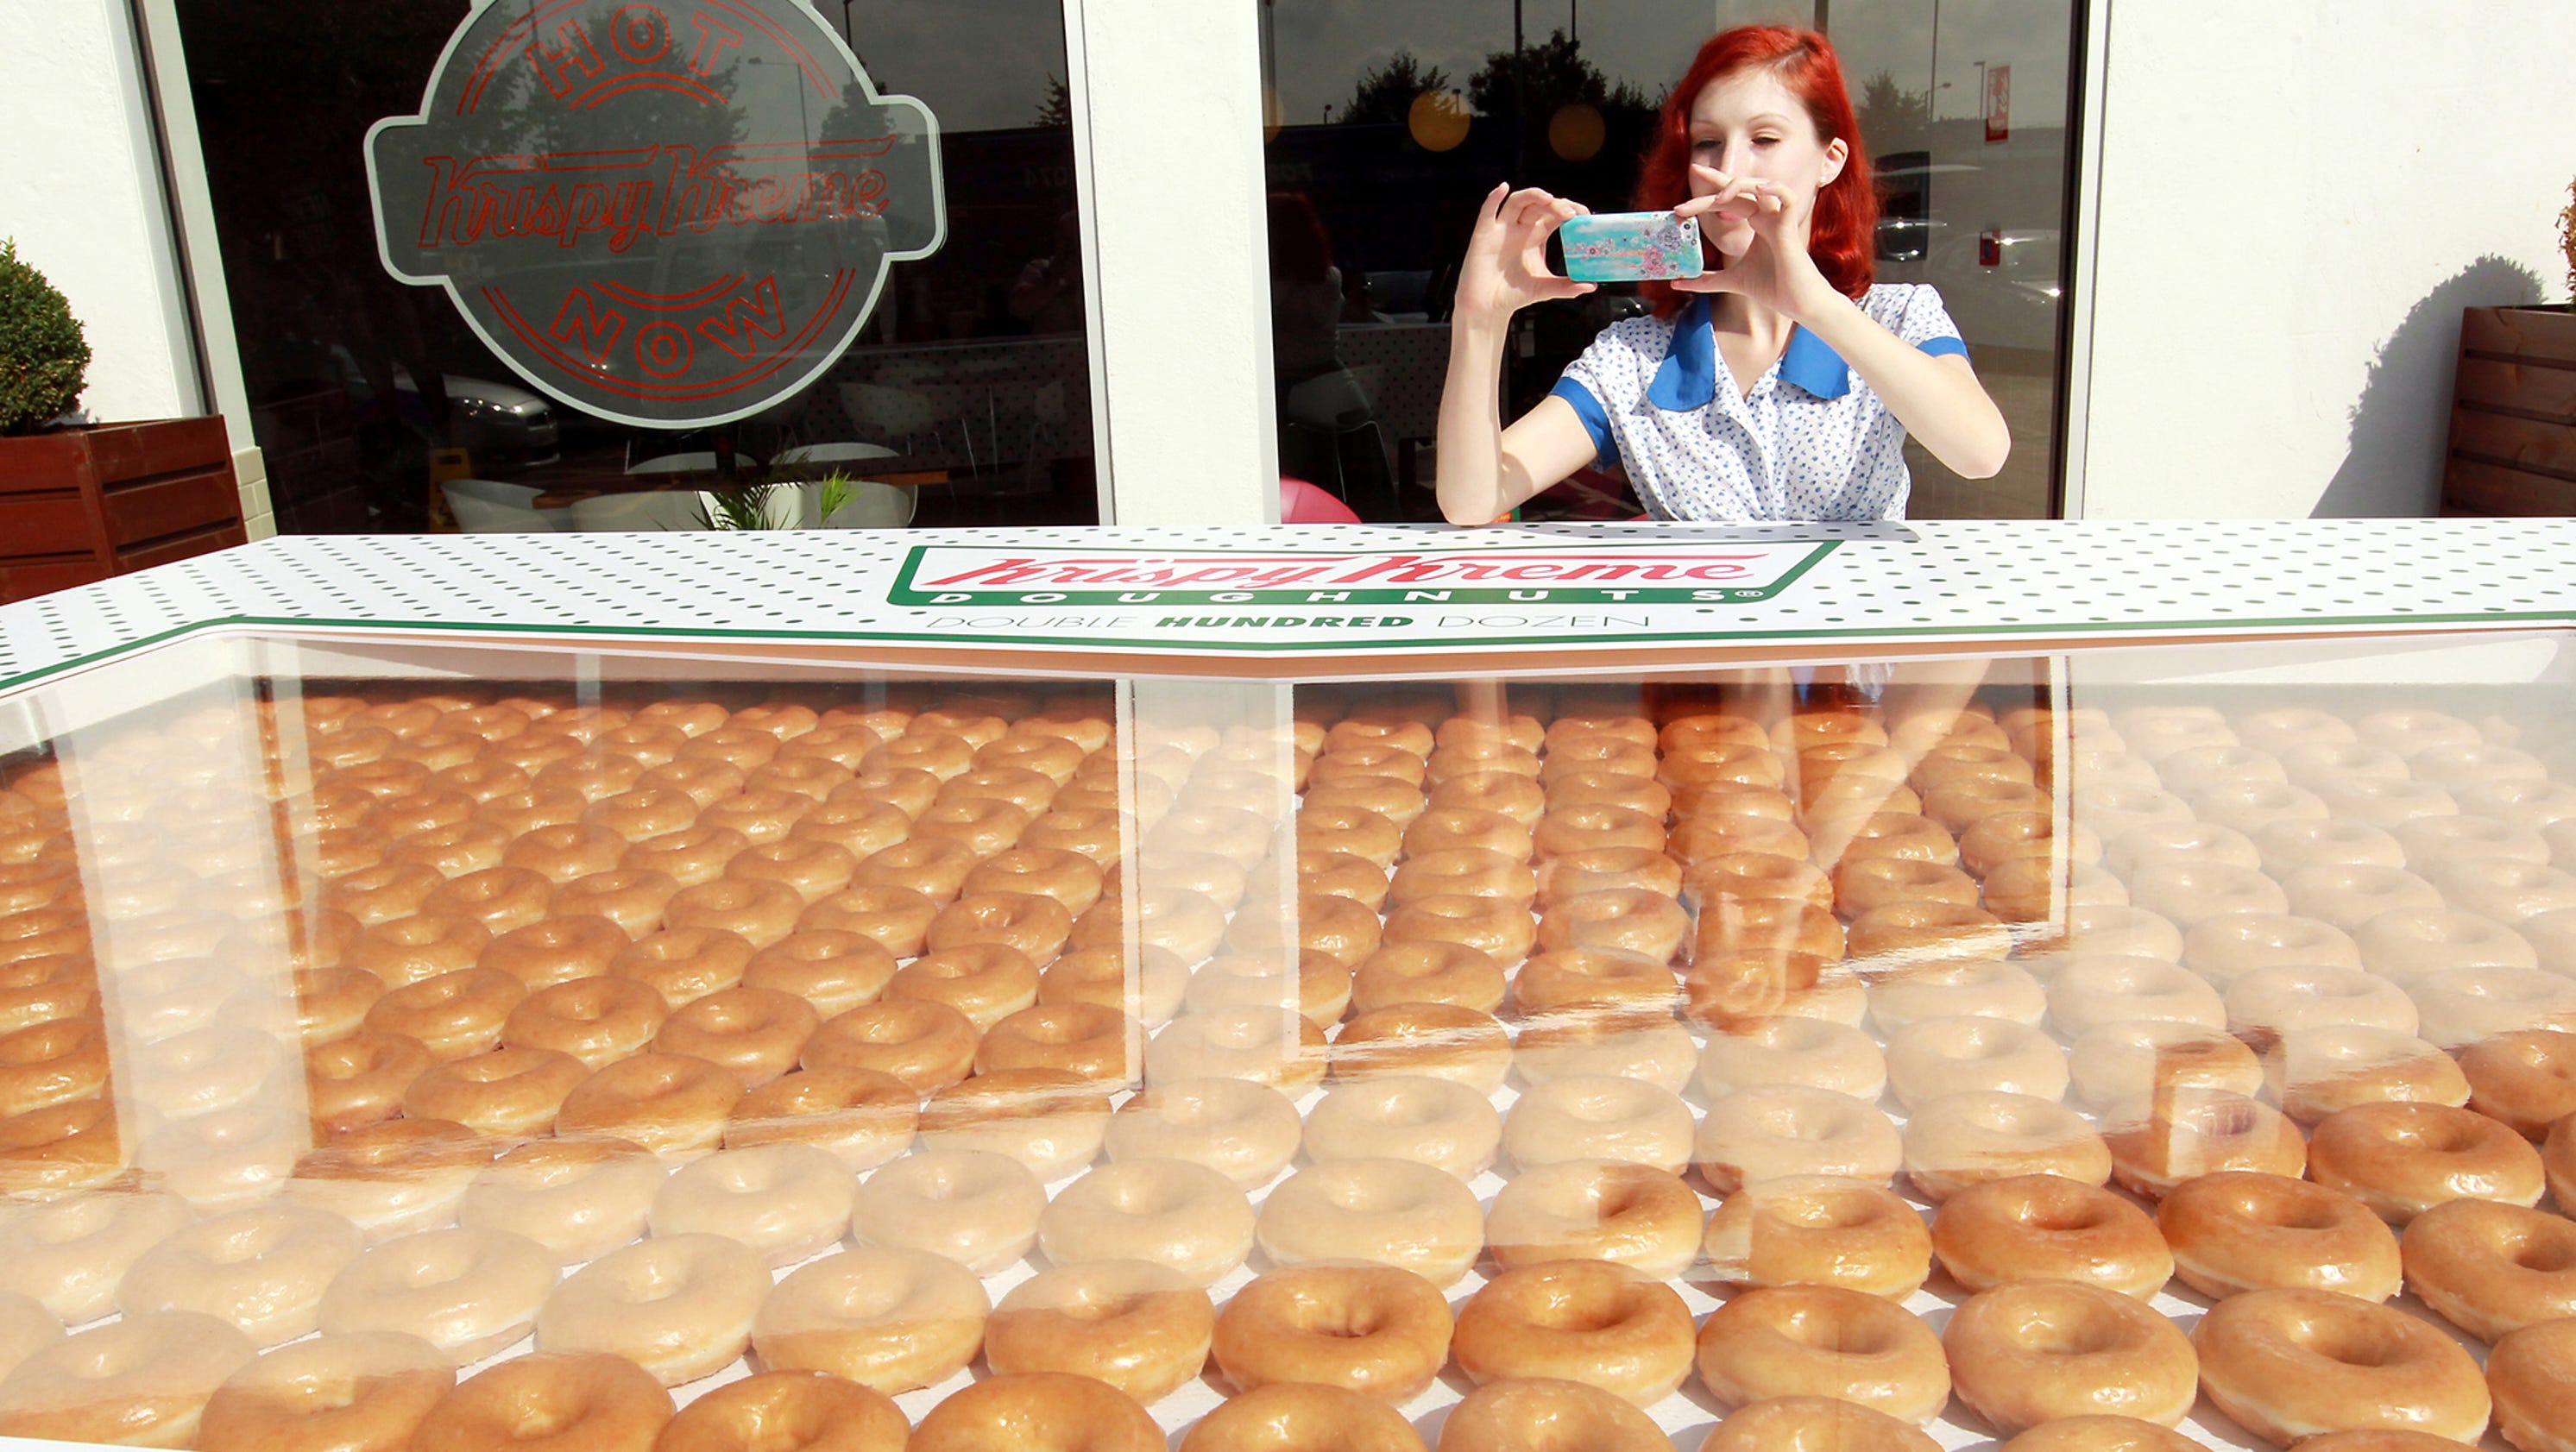 Krispy Kreme's giant box of doughnuts